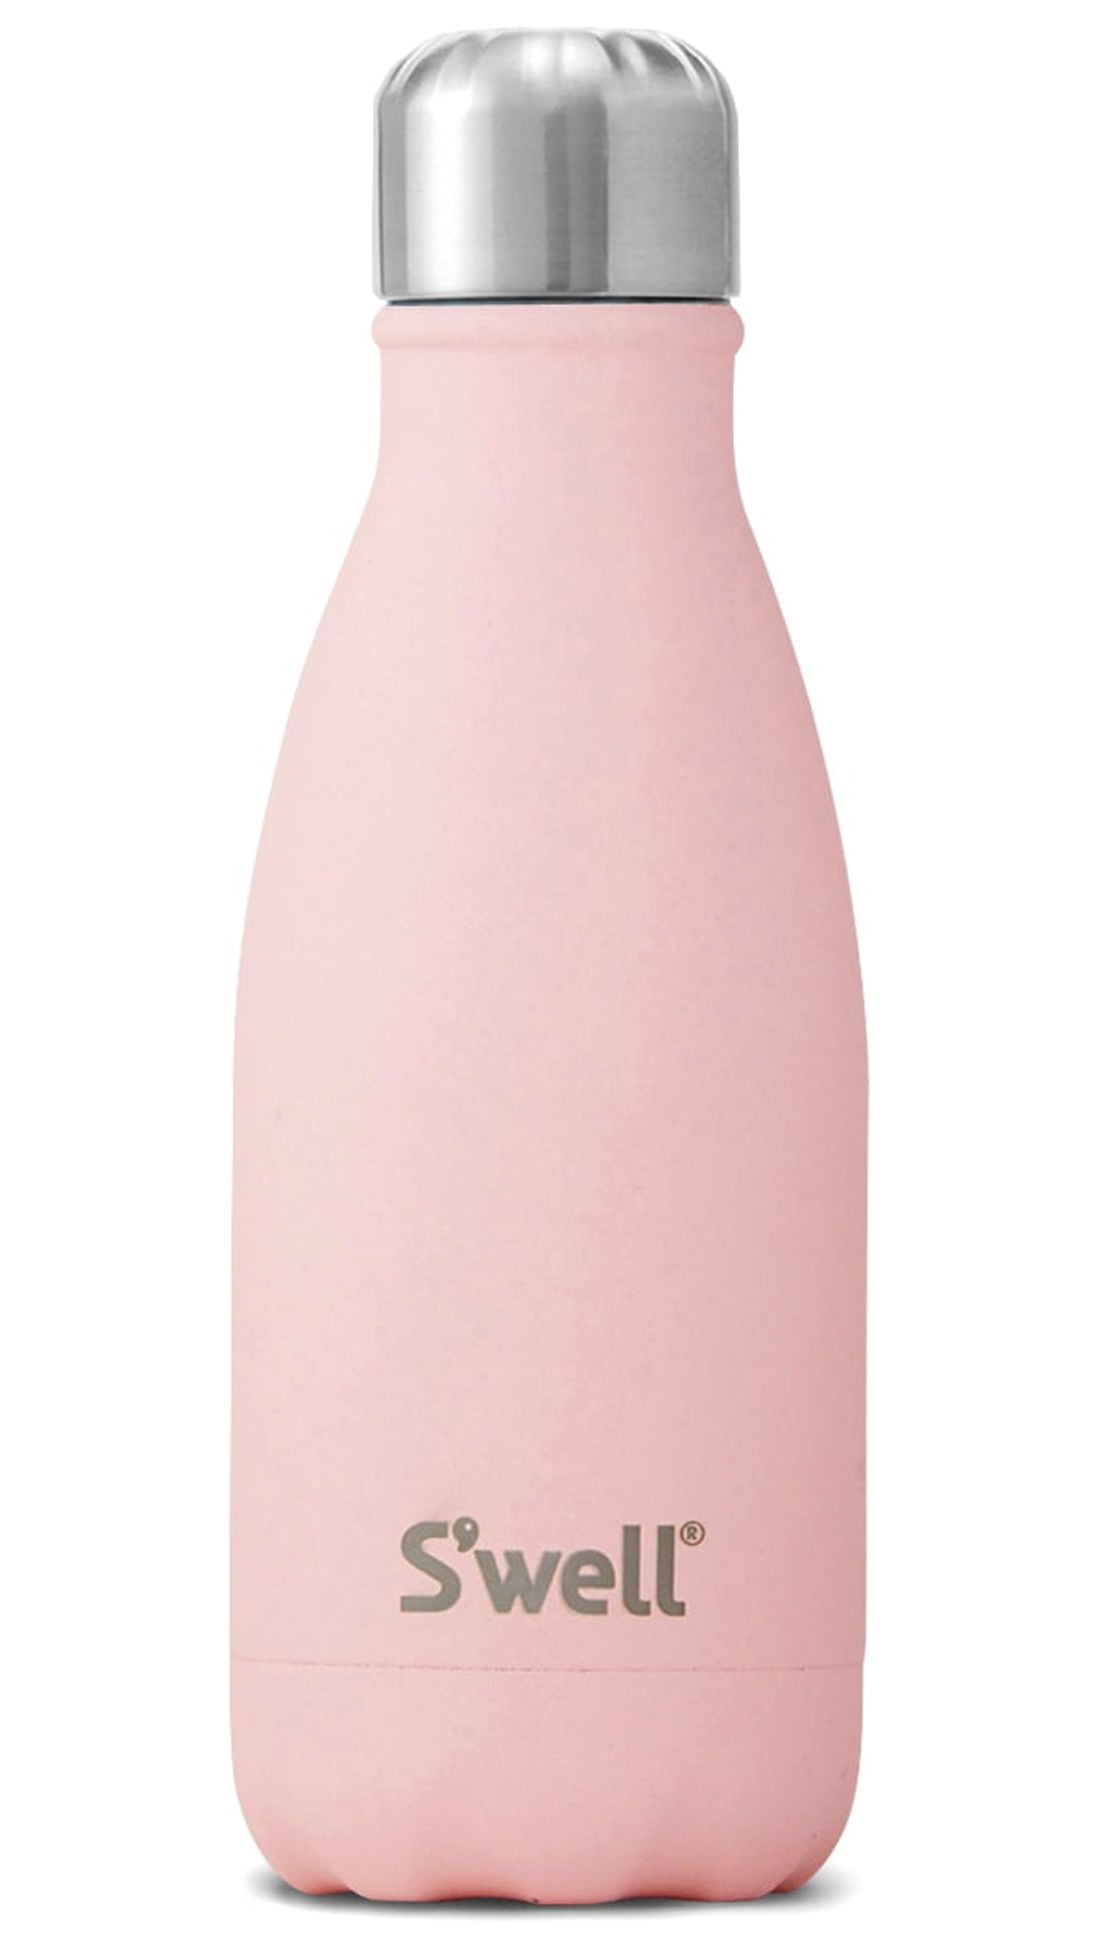 S'well 9oz Bottle Pink Topaz